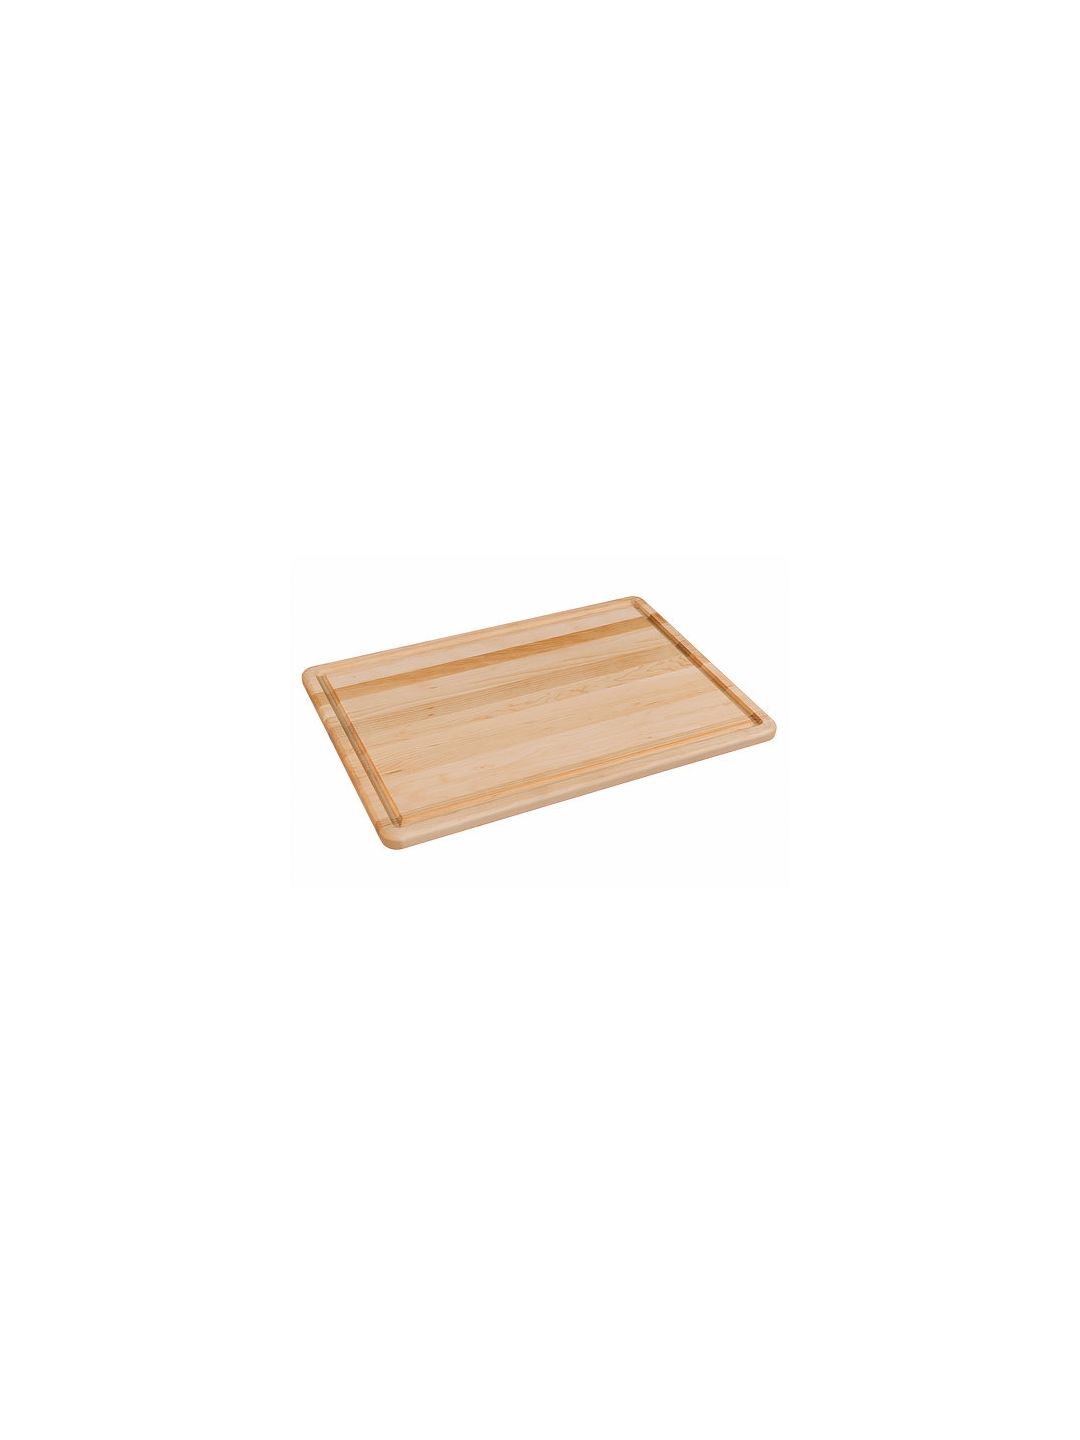 20" x 14" Maple Wood Cutting Board - Labell - Doyon Després